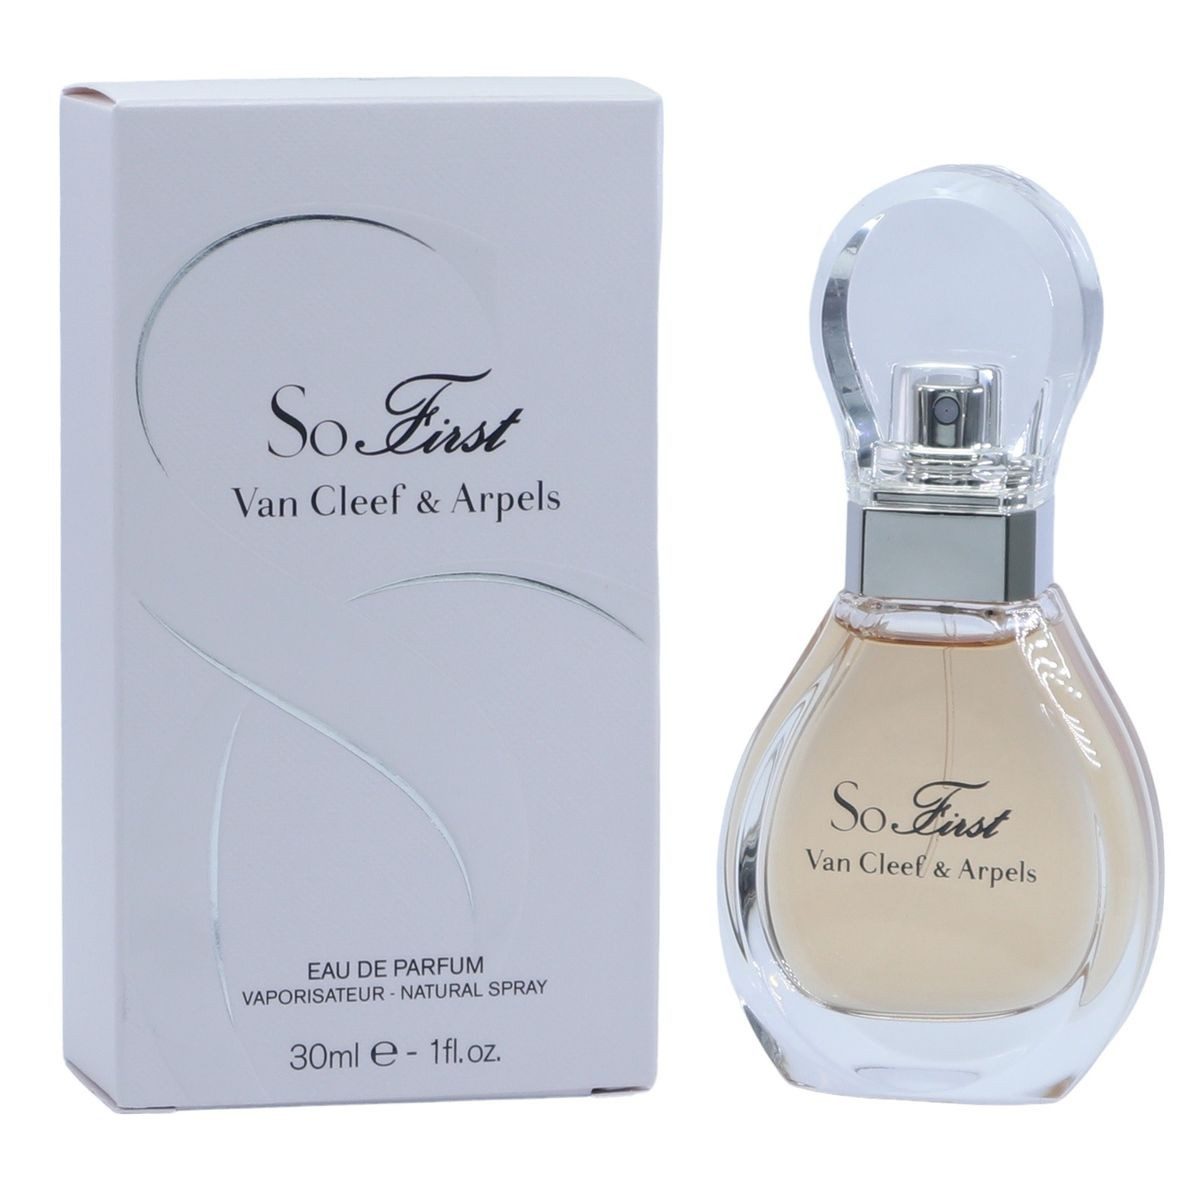 Van Cleef & Arpels Eau de Parfum Van Cleef & Arpels So First Eau de Parfum Spray 30 ml